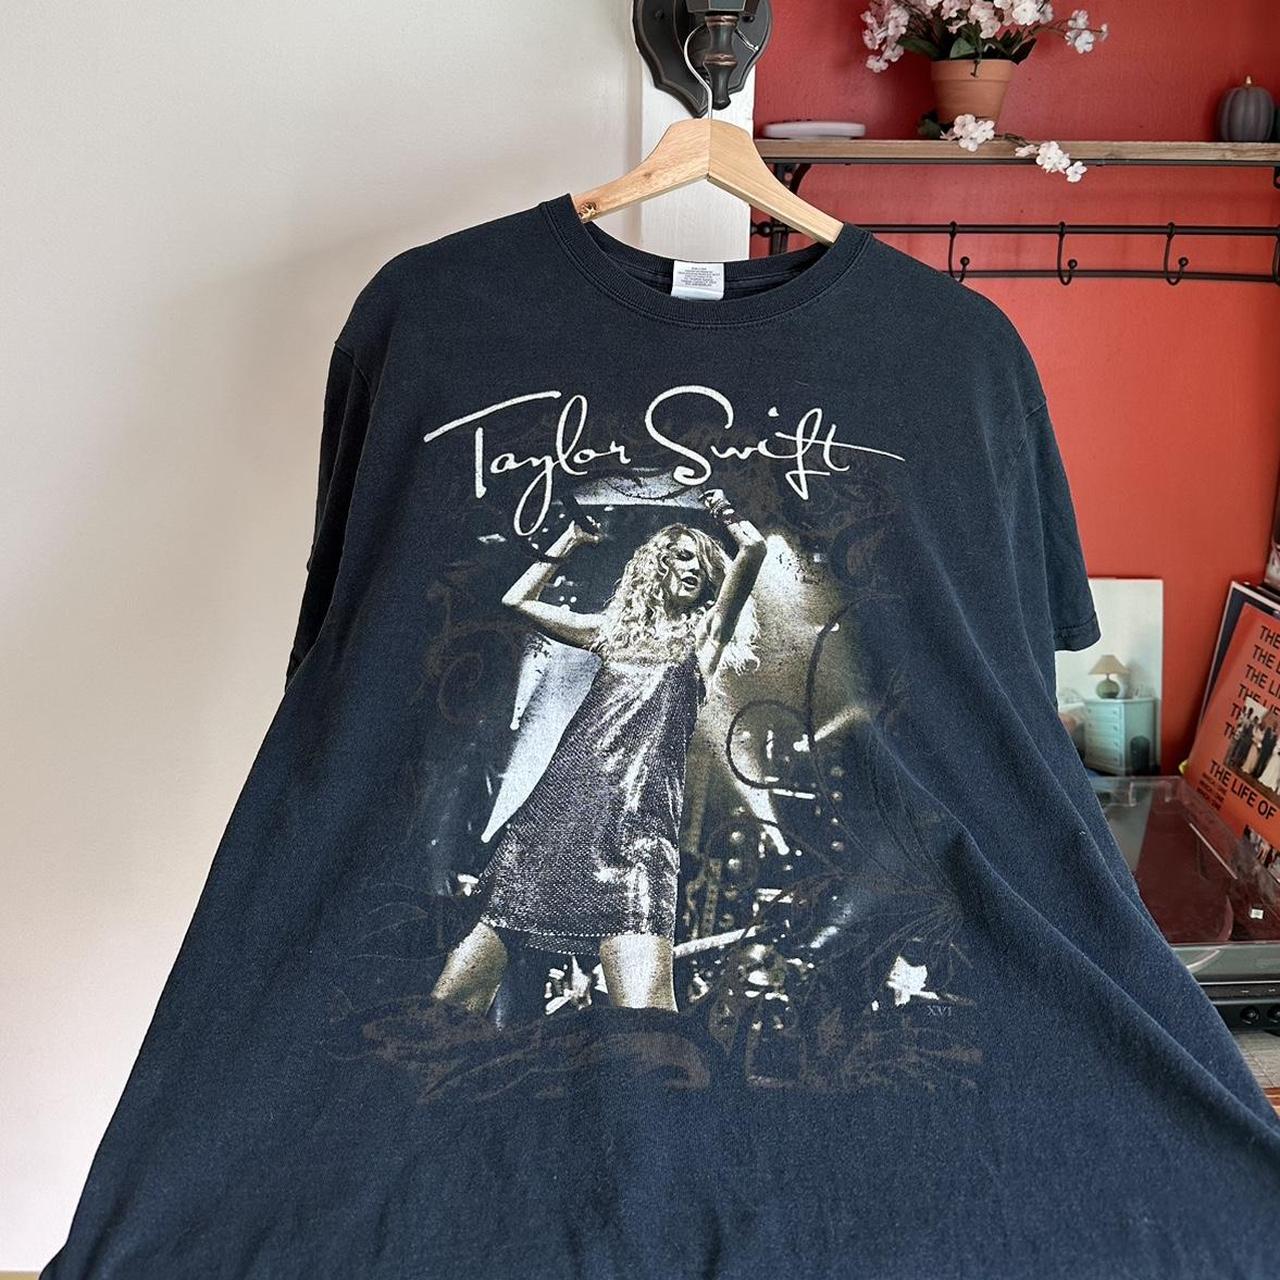 Tops, Taylor Swift Vintage 9s Shirt Taylor Swift Tshirt